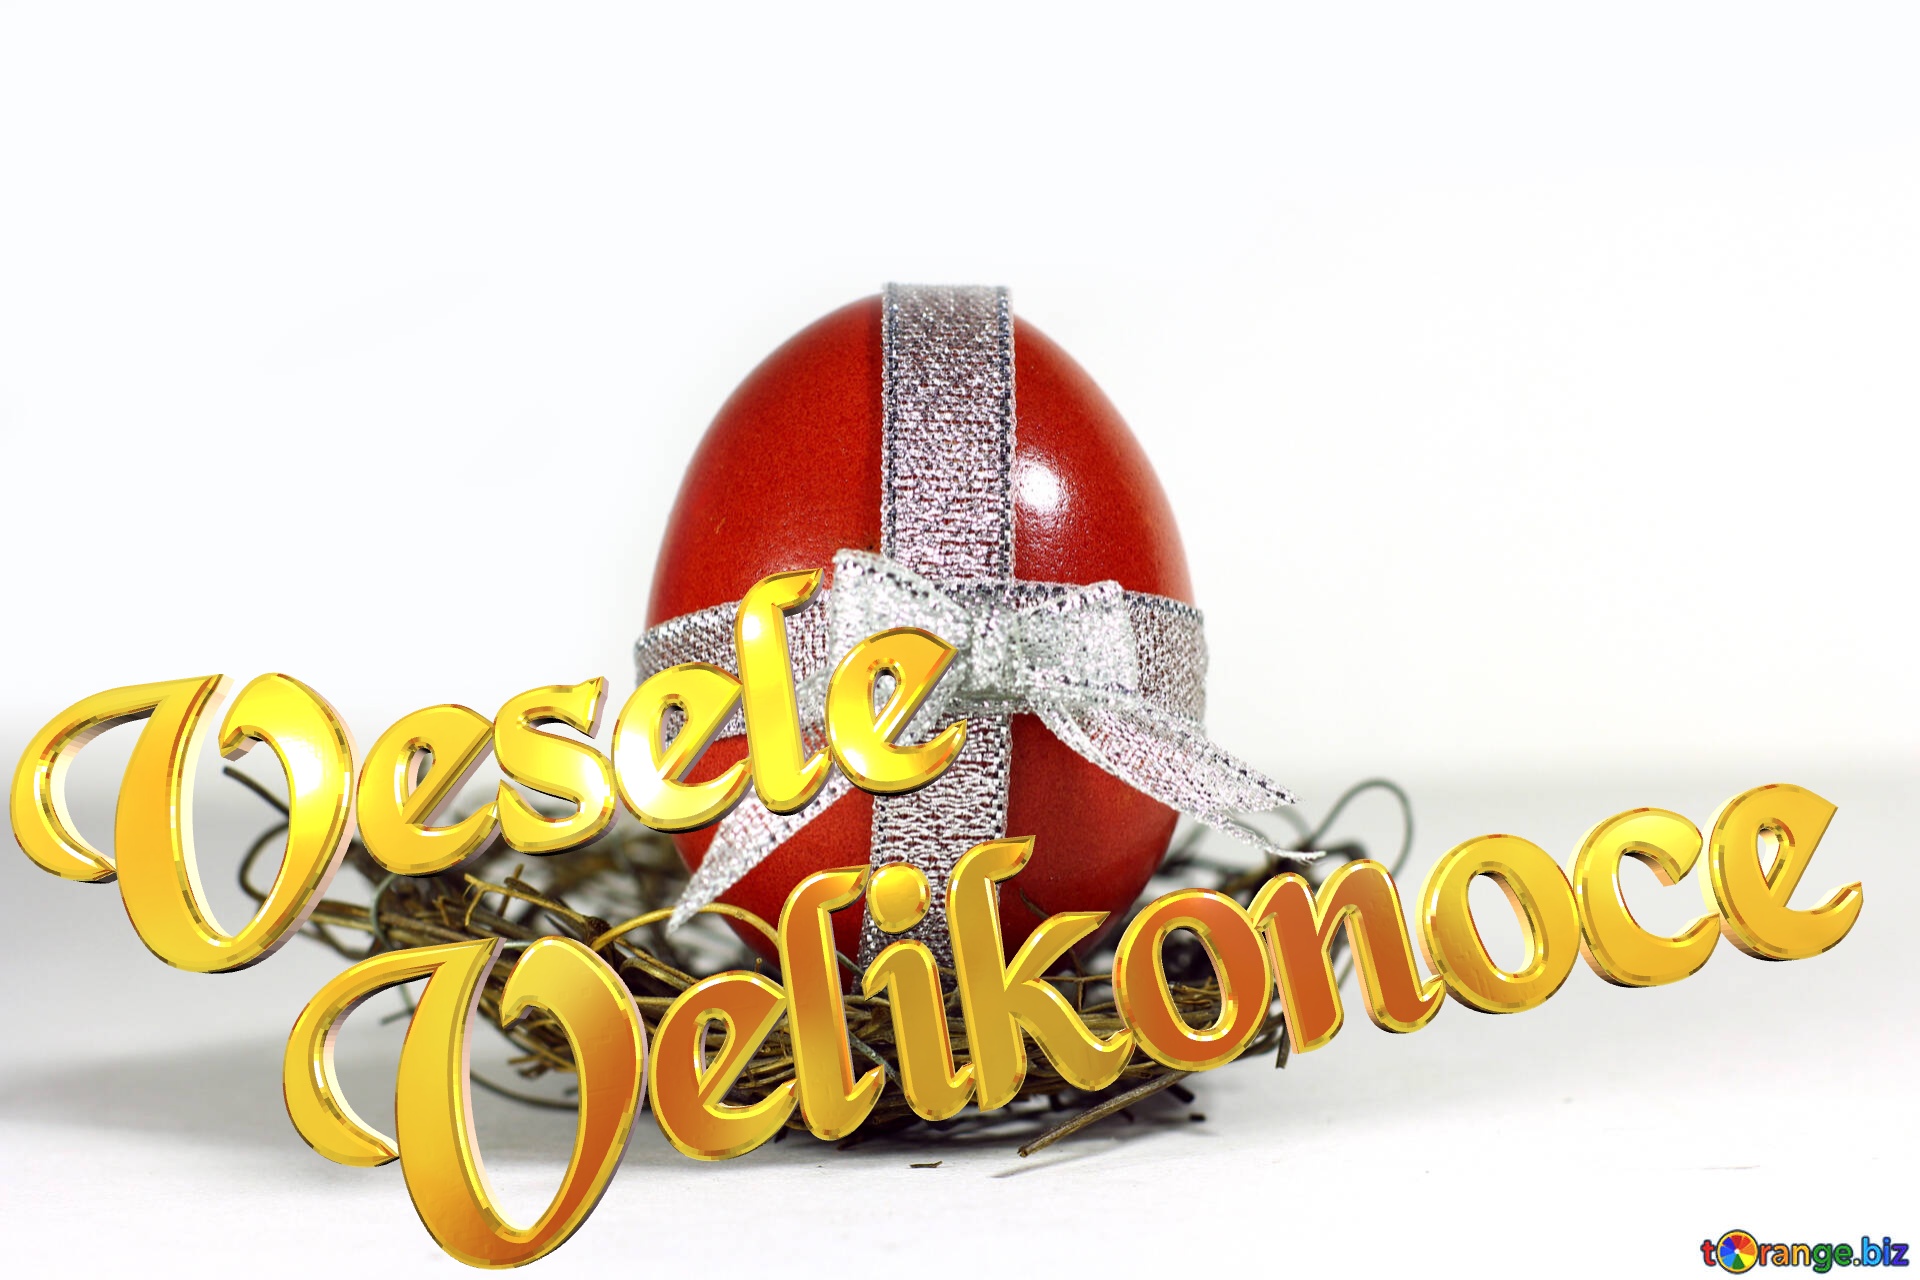 Vesele     Velikonoce  Eggs easter wrapped №50273